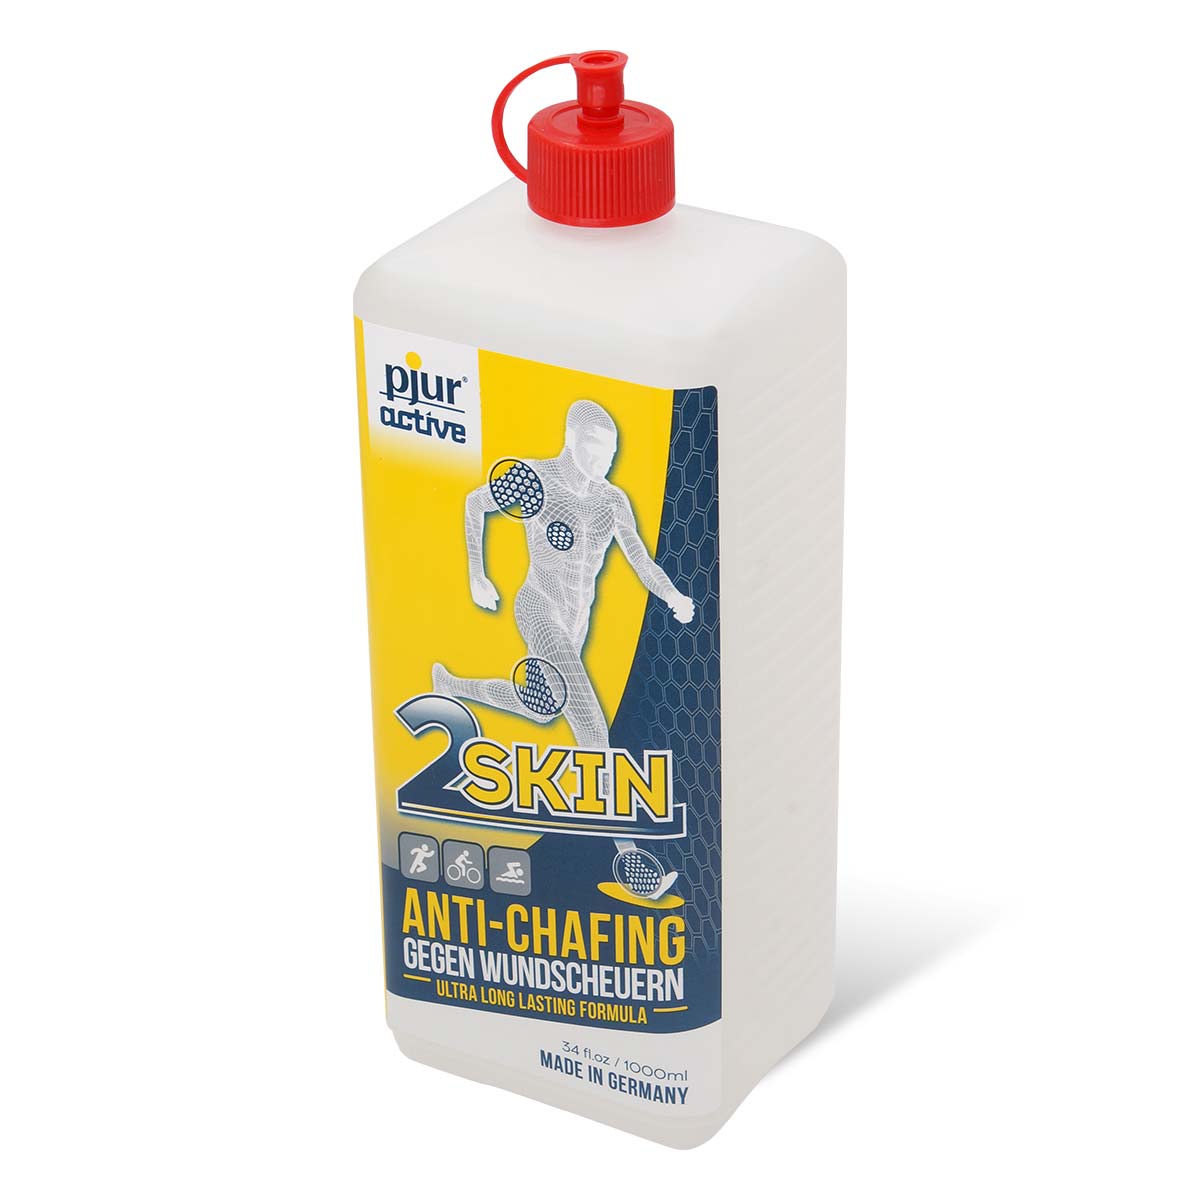 pjuractive 2skin ANTI-CHAFING GEL - 1000ml refill bottle-p_1